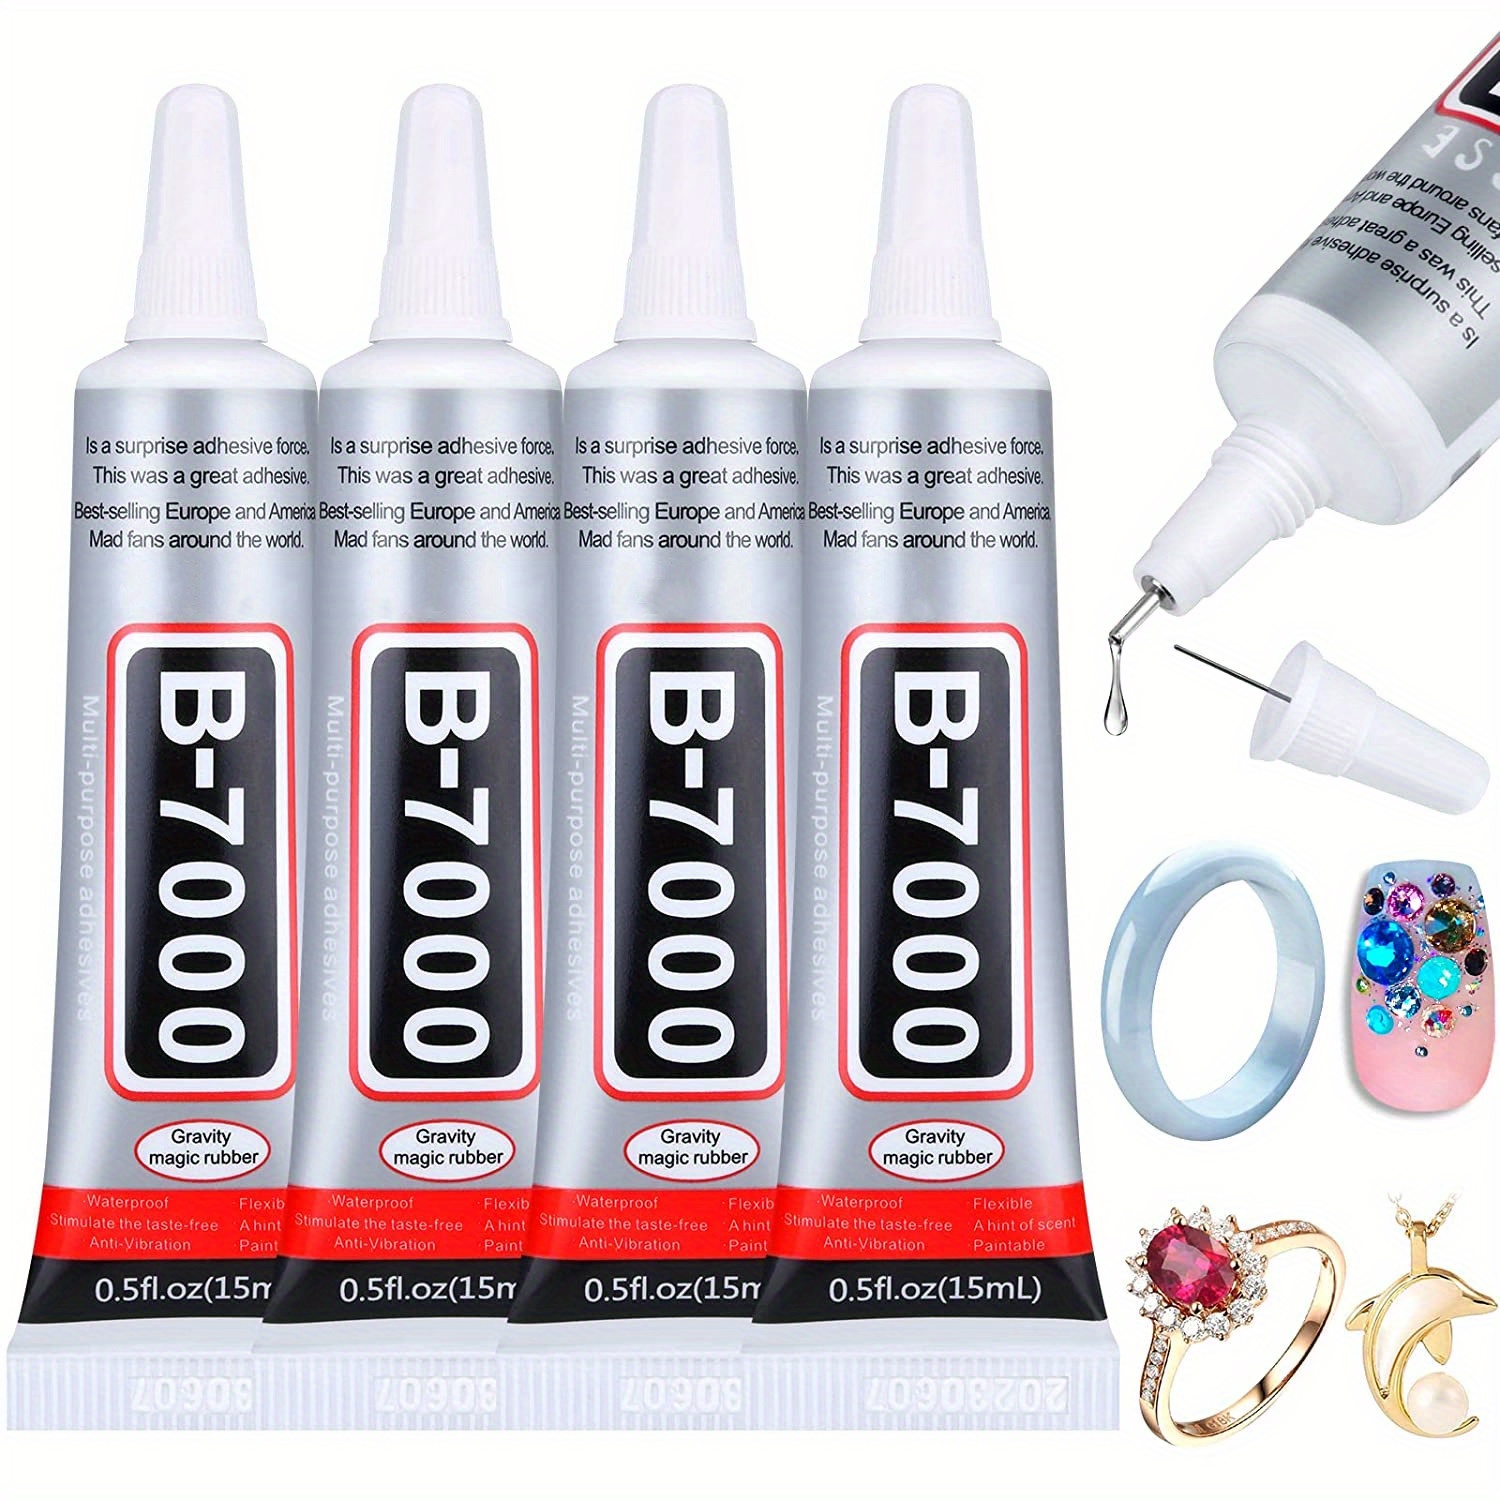 B-7000 Craft Glue for Jewelry Making, Multi-Function B-7000 Super